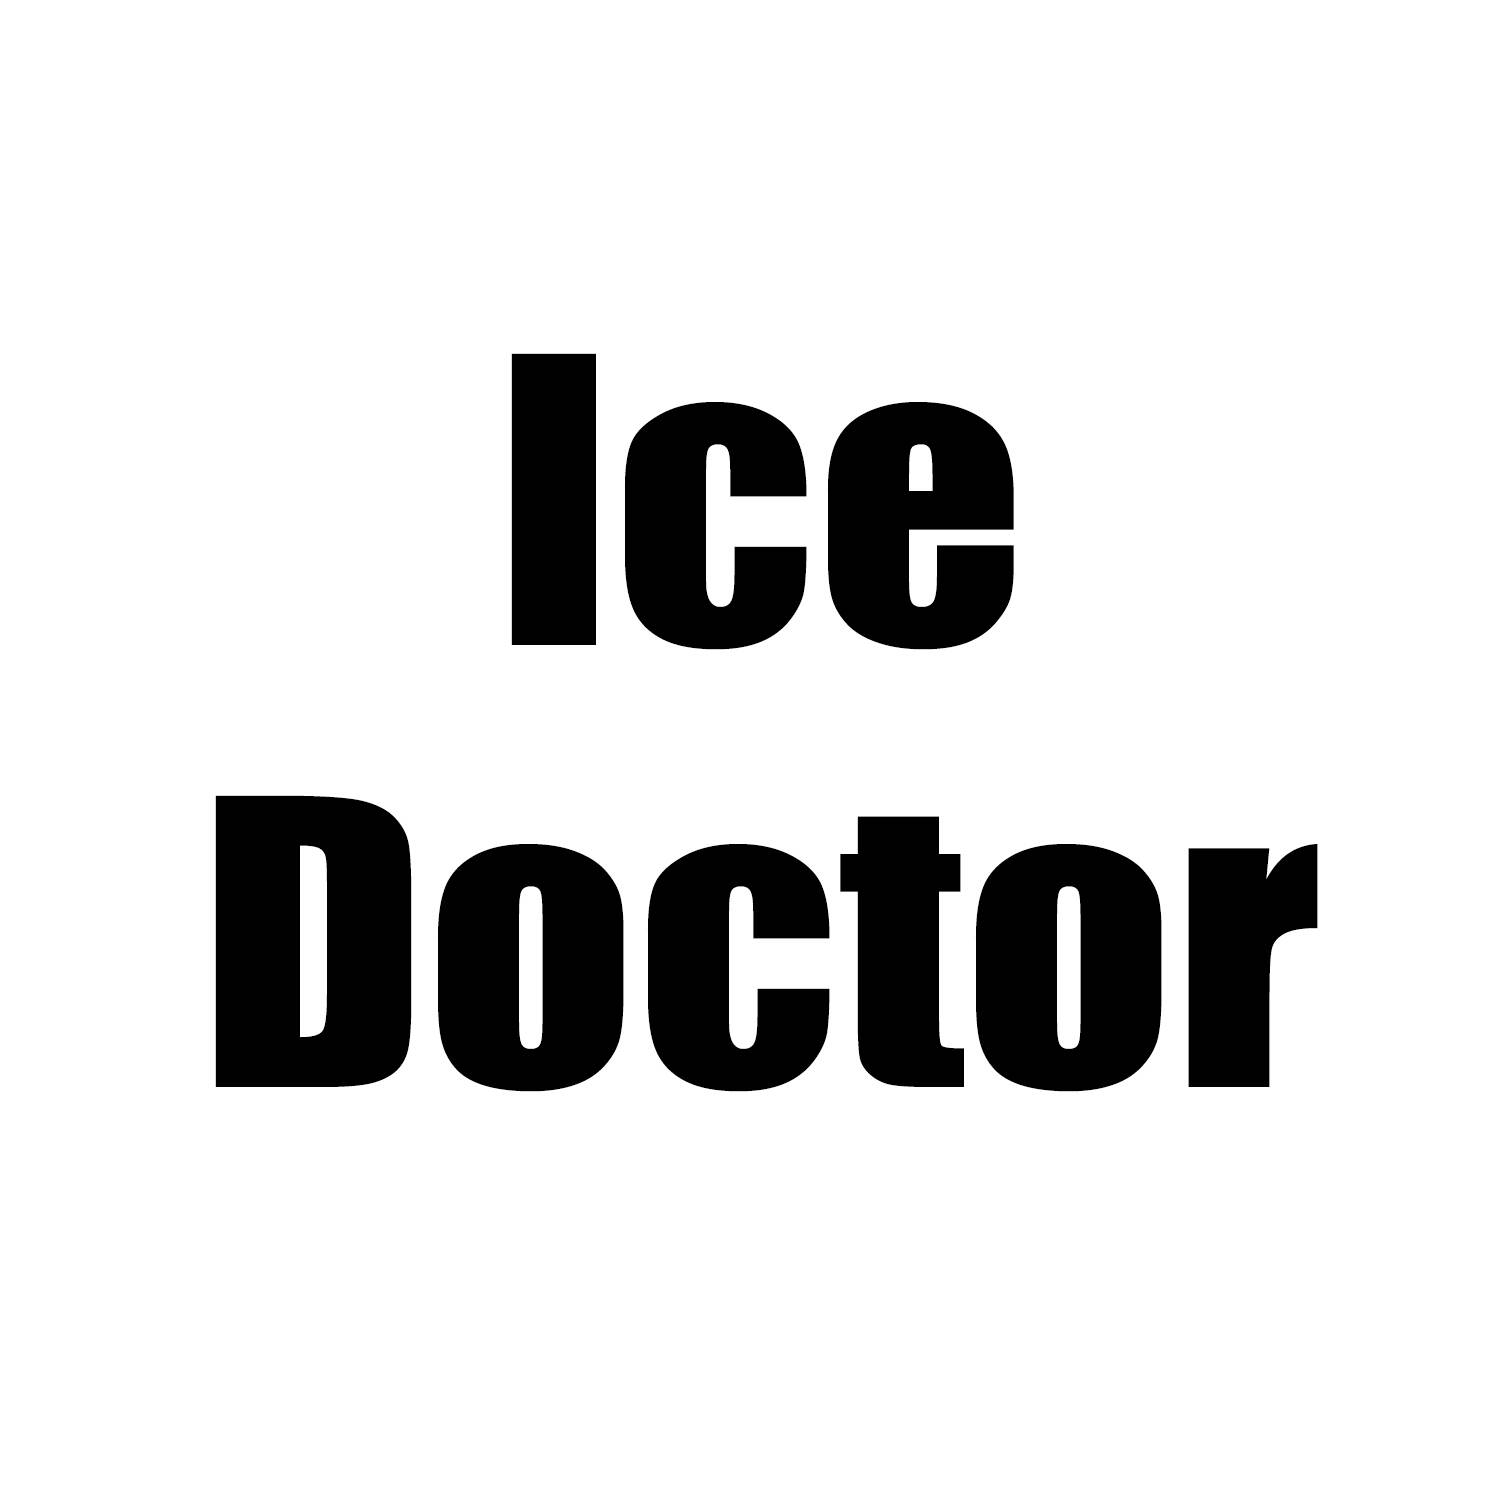 Ice Doctor